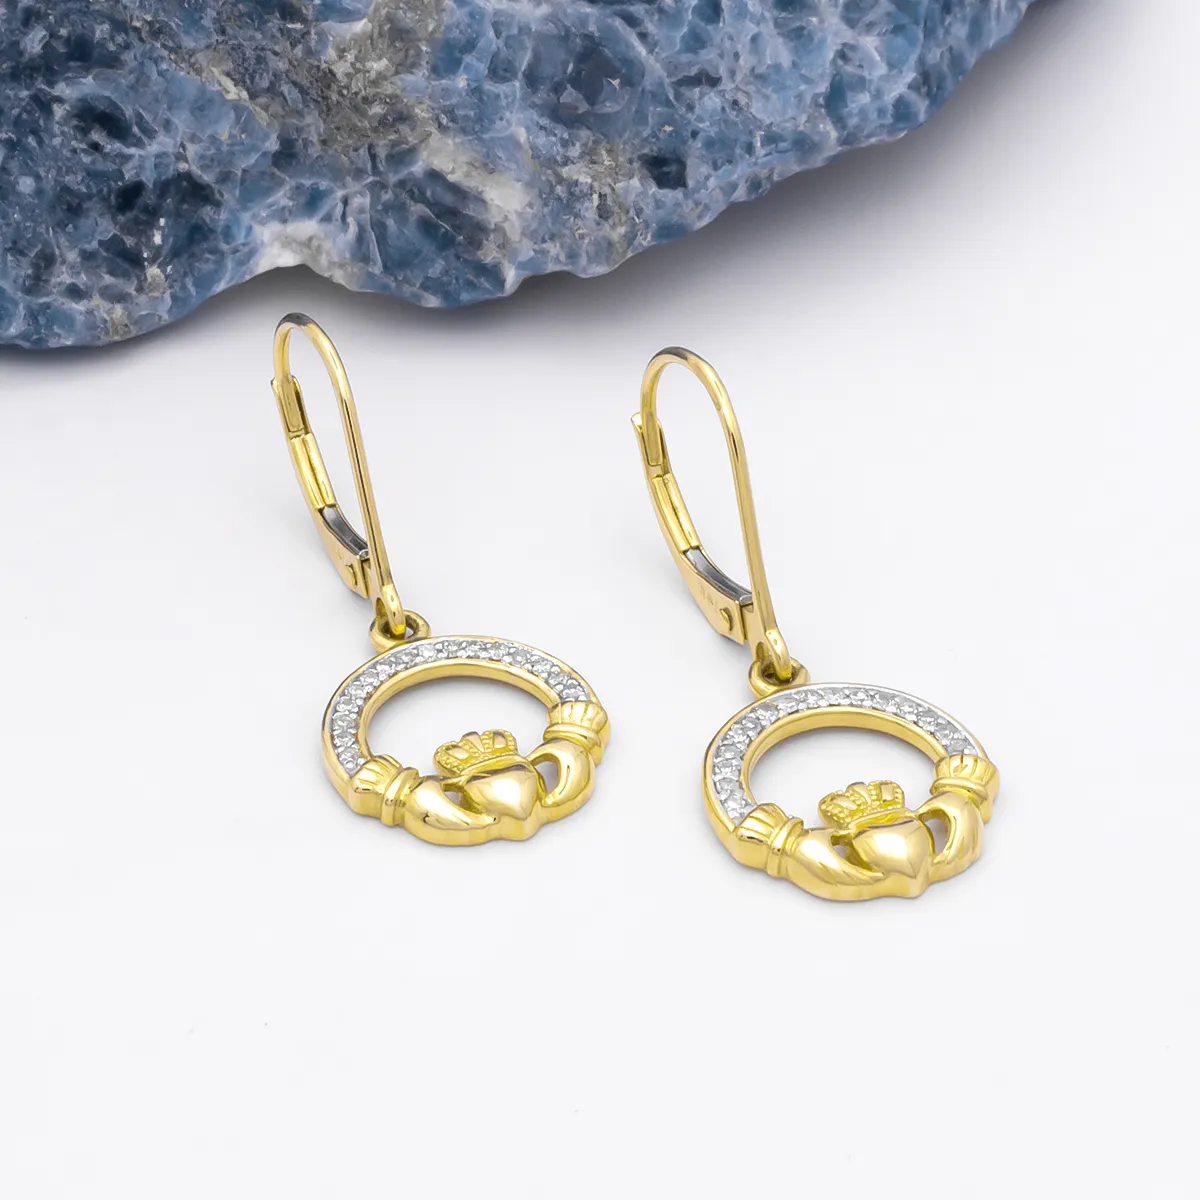 IJCE0012 Yellow Gold Claddagh Ring Earrings 4